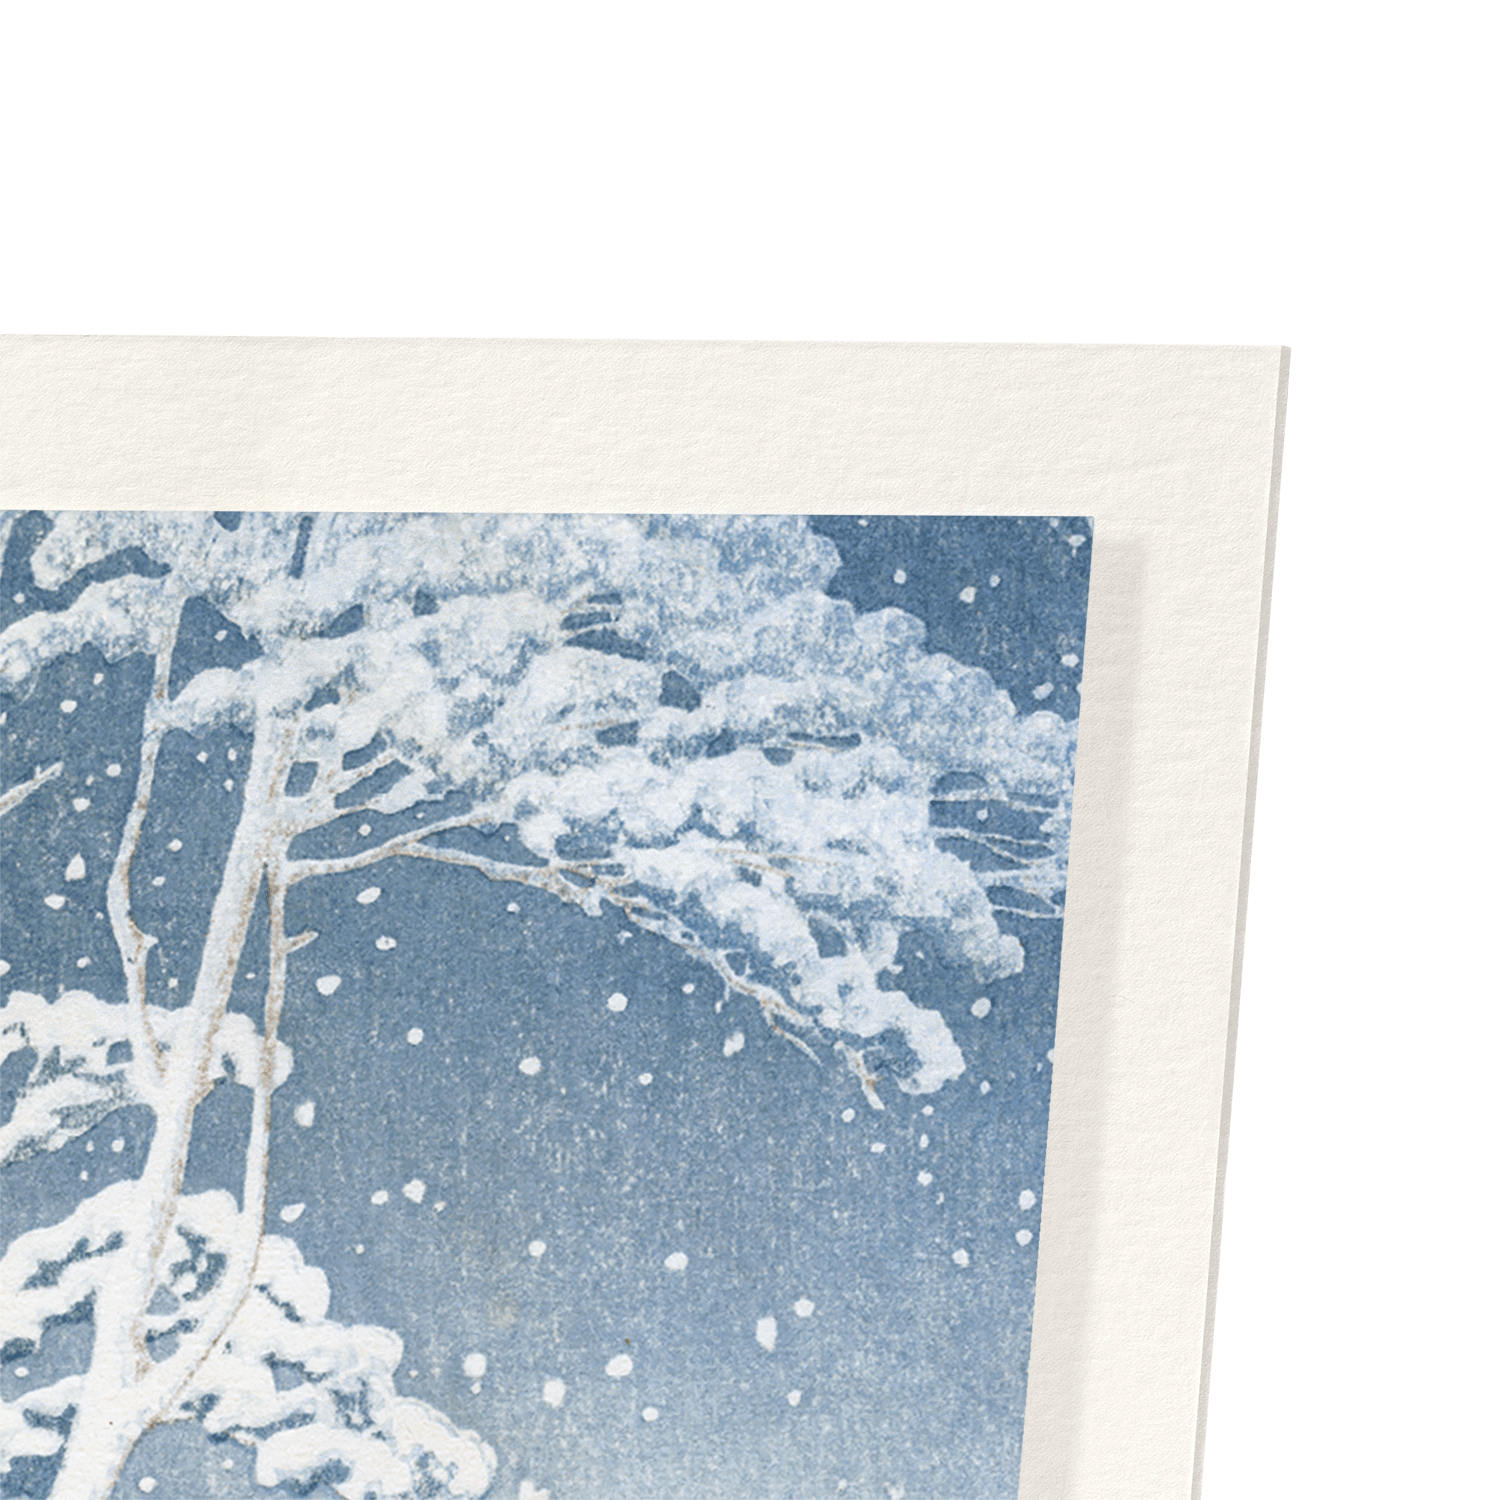 SNOW AT BRIDGE: Japanese Art Print